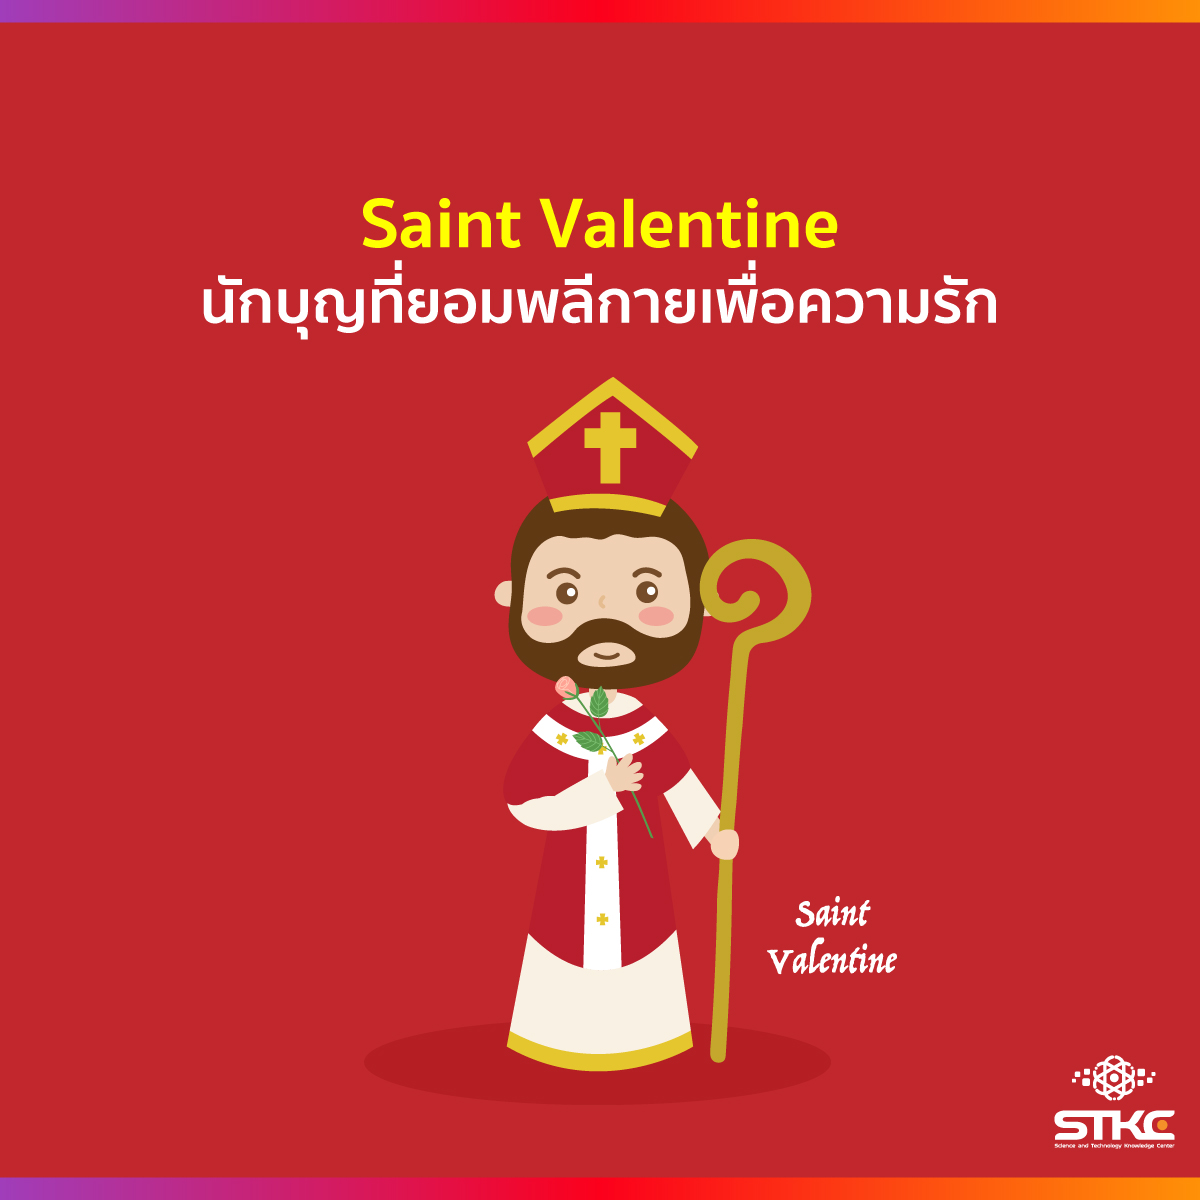 Saint Valentine นักบุญที่ยอมพลีกายเพื่อความรัก